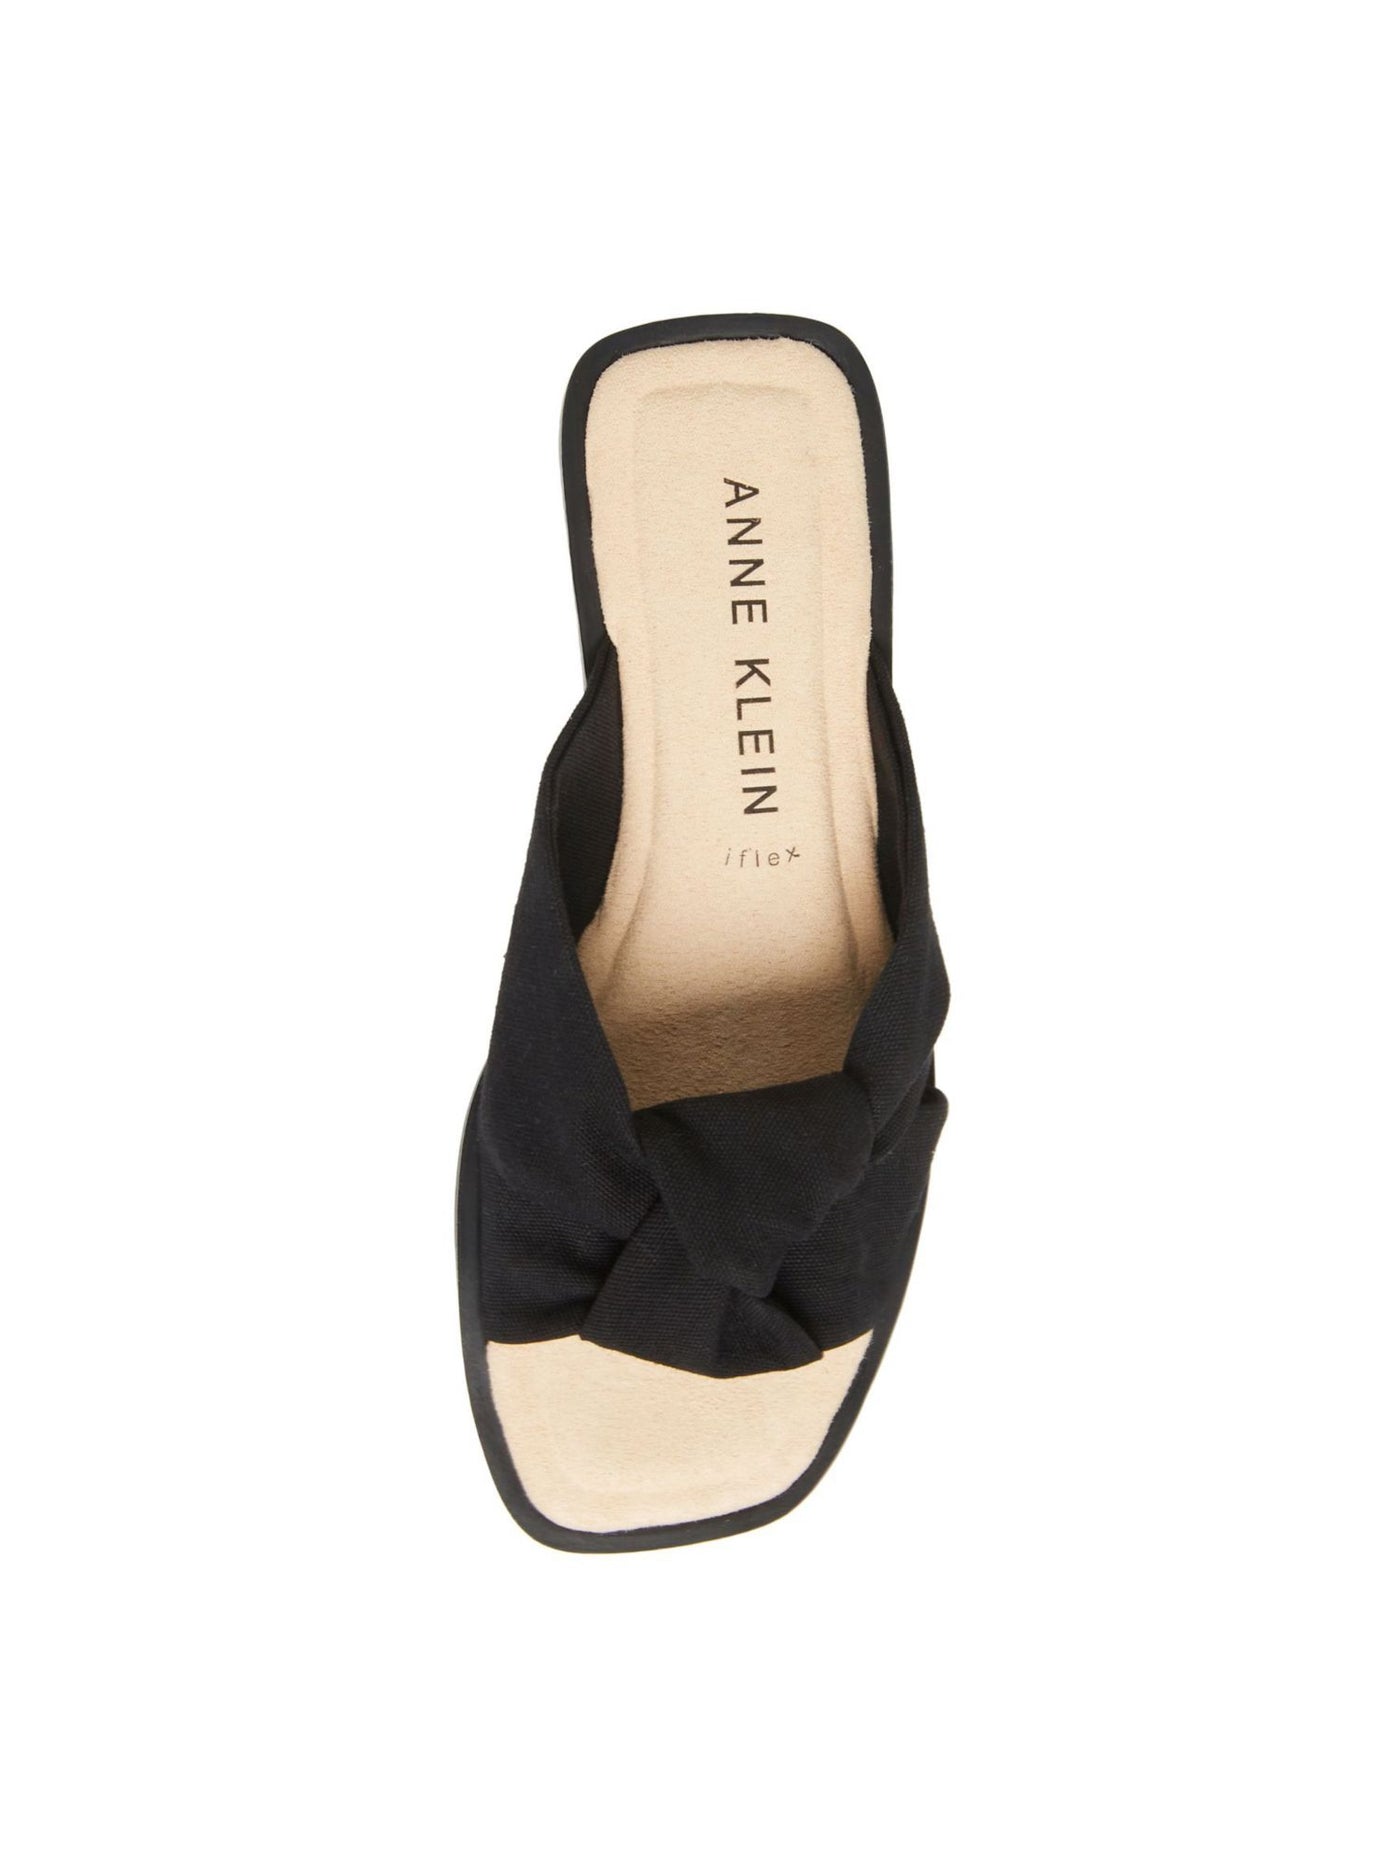 ANNE KLEIN Womens Black Padded Domani Square Toe Slip On Slide Sandals Shoes 10 M